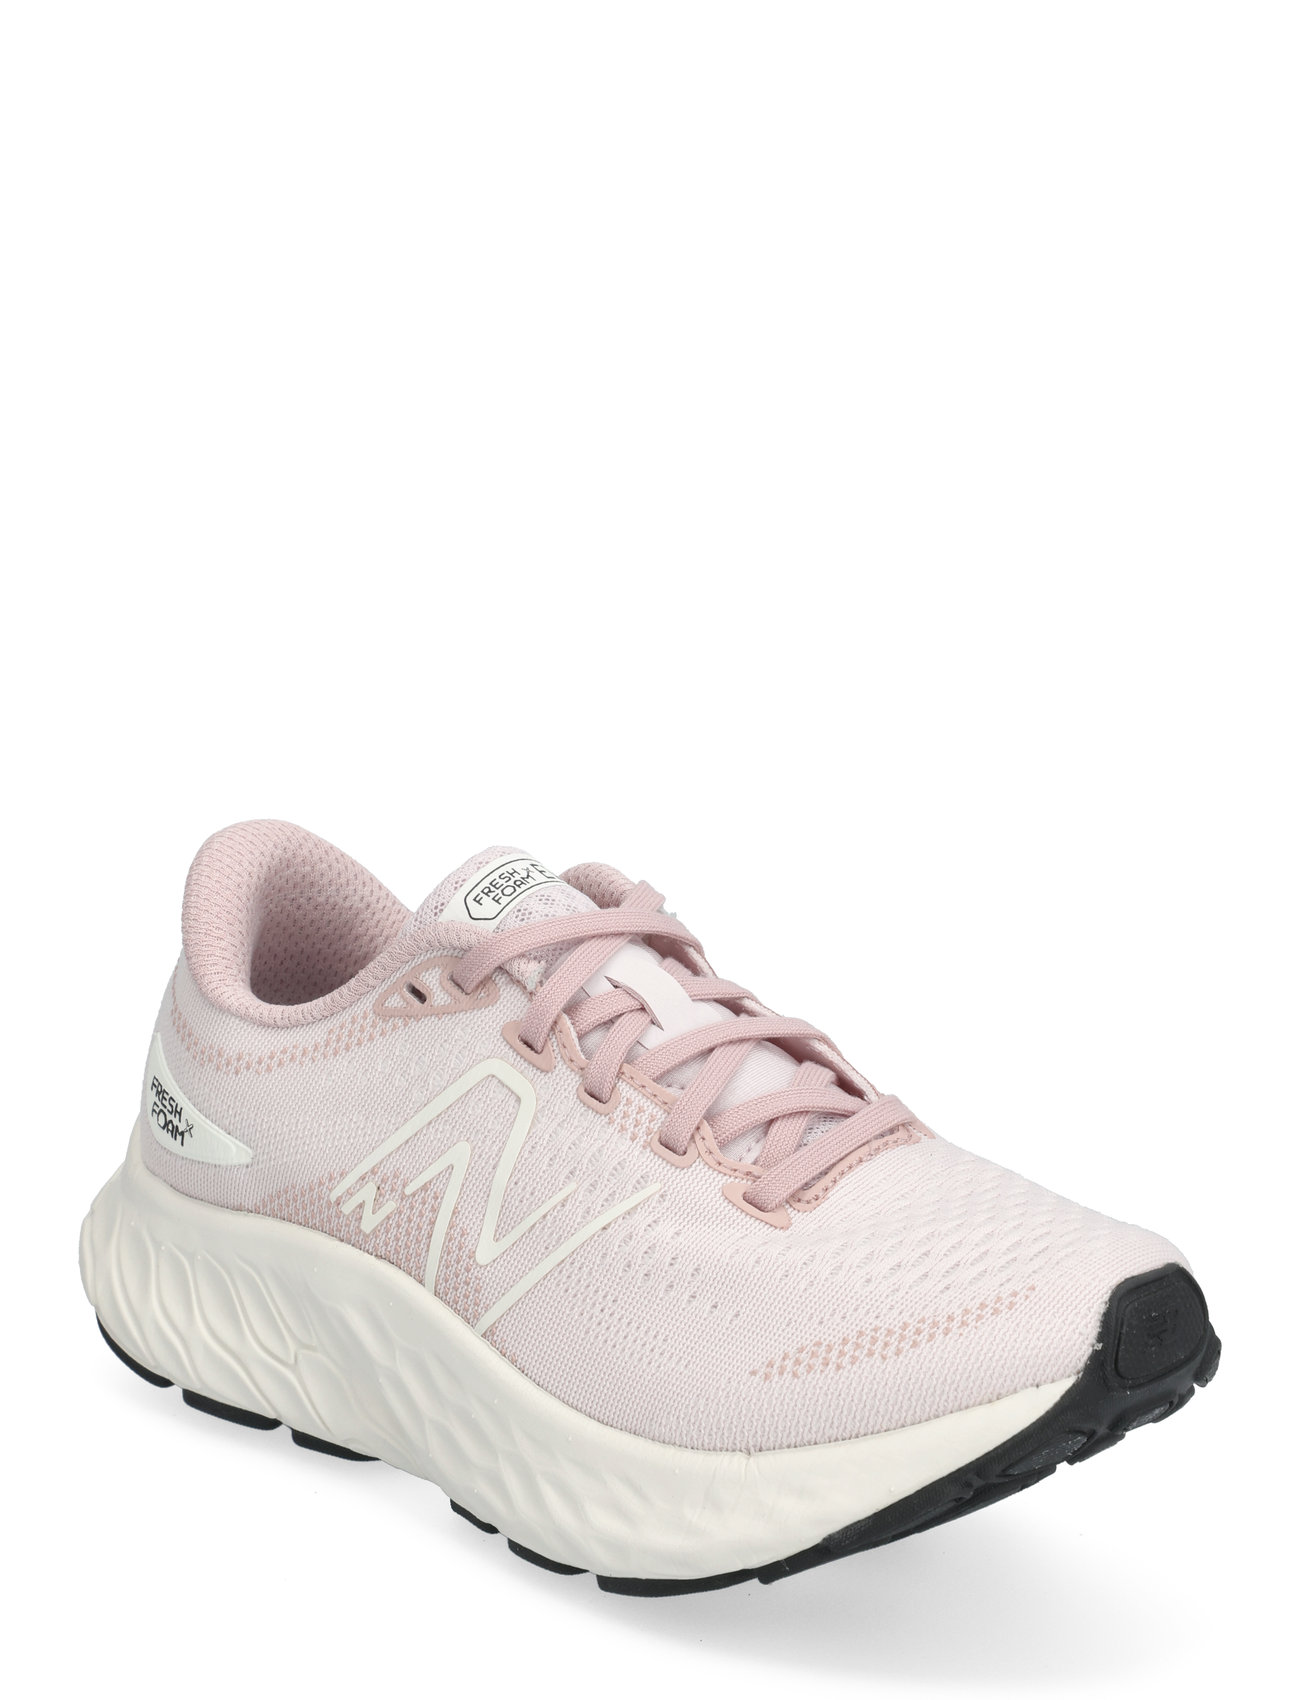 Fresh Foam X Evoz Stability Sport Sport Shoes Running Shoes Pink New Balance